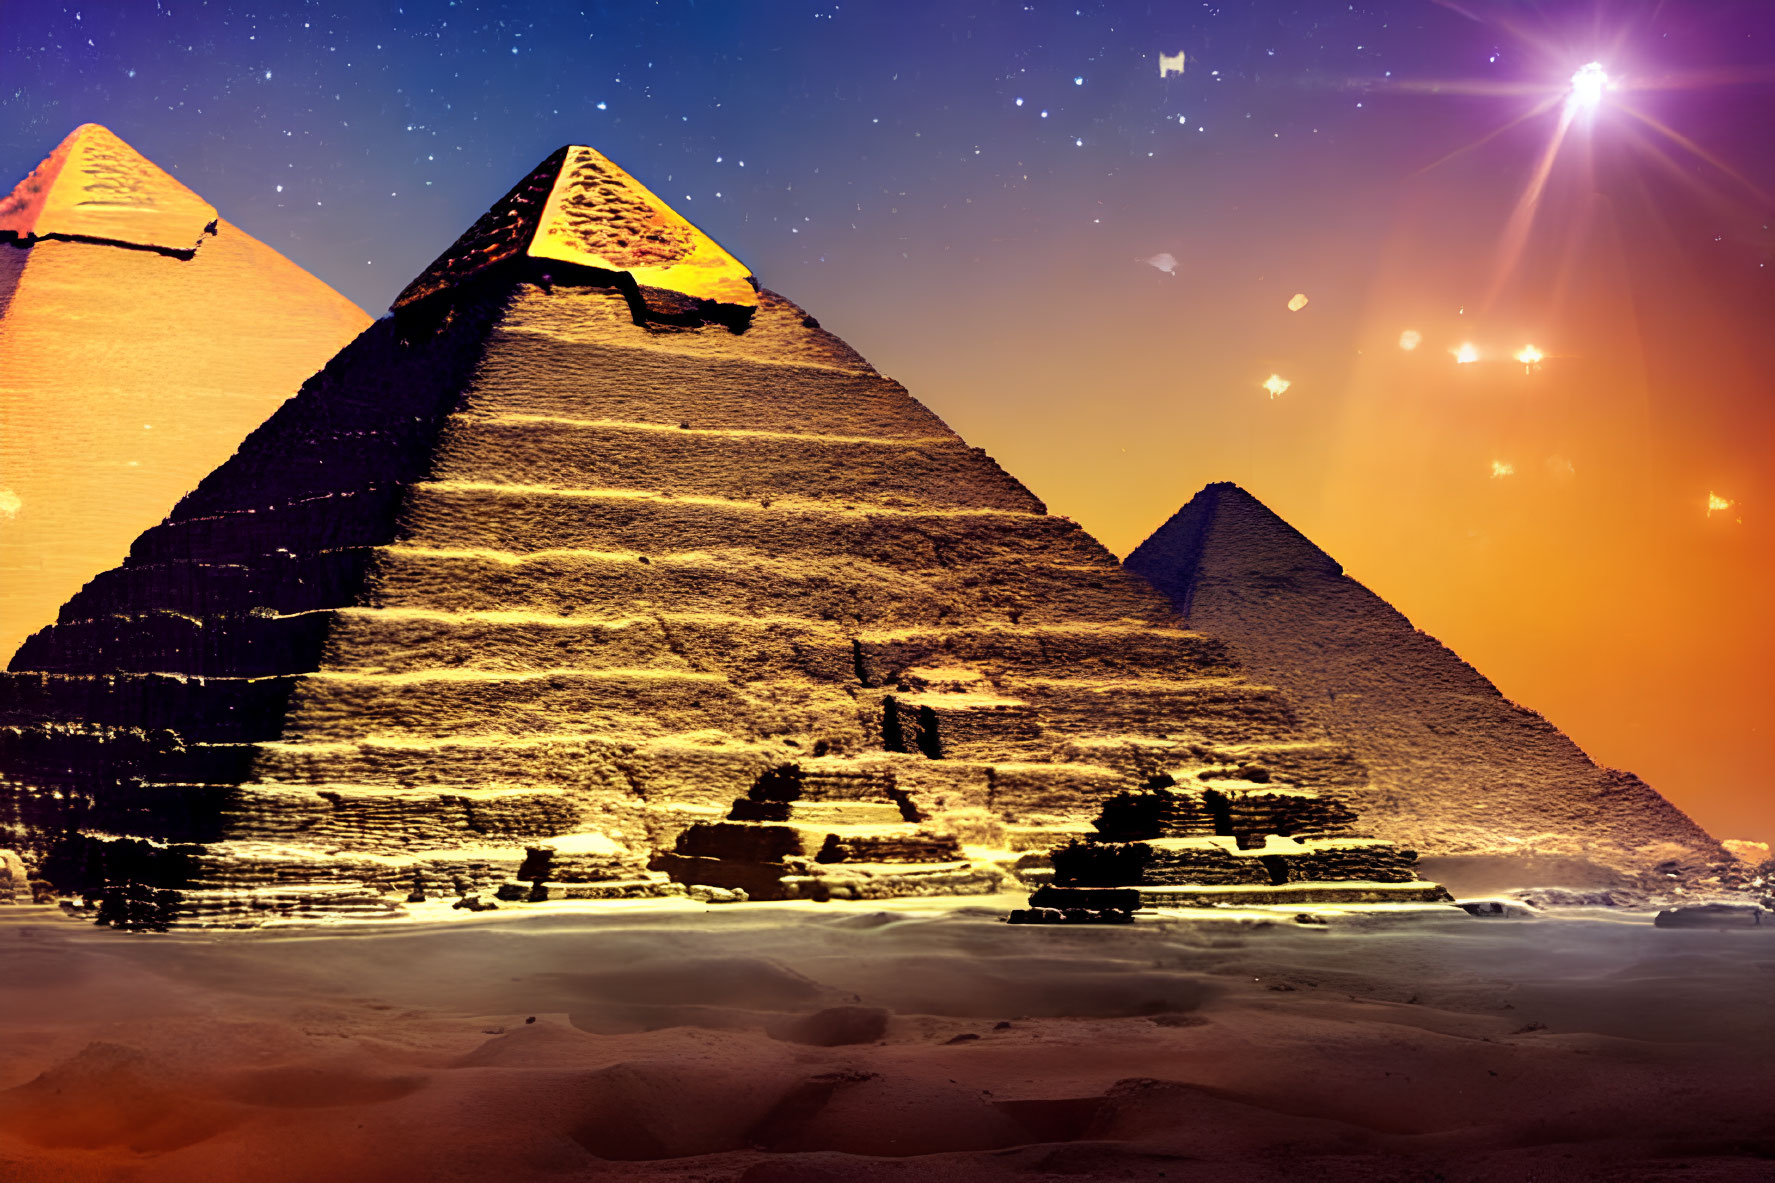 Iconic Great Pyramids of Giza illuminated at night with starburst effect